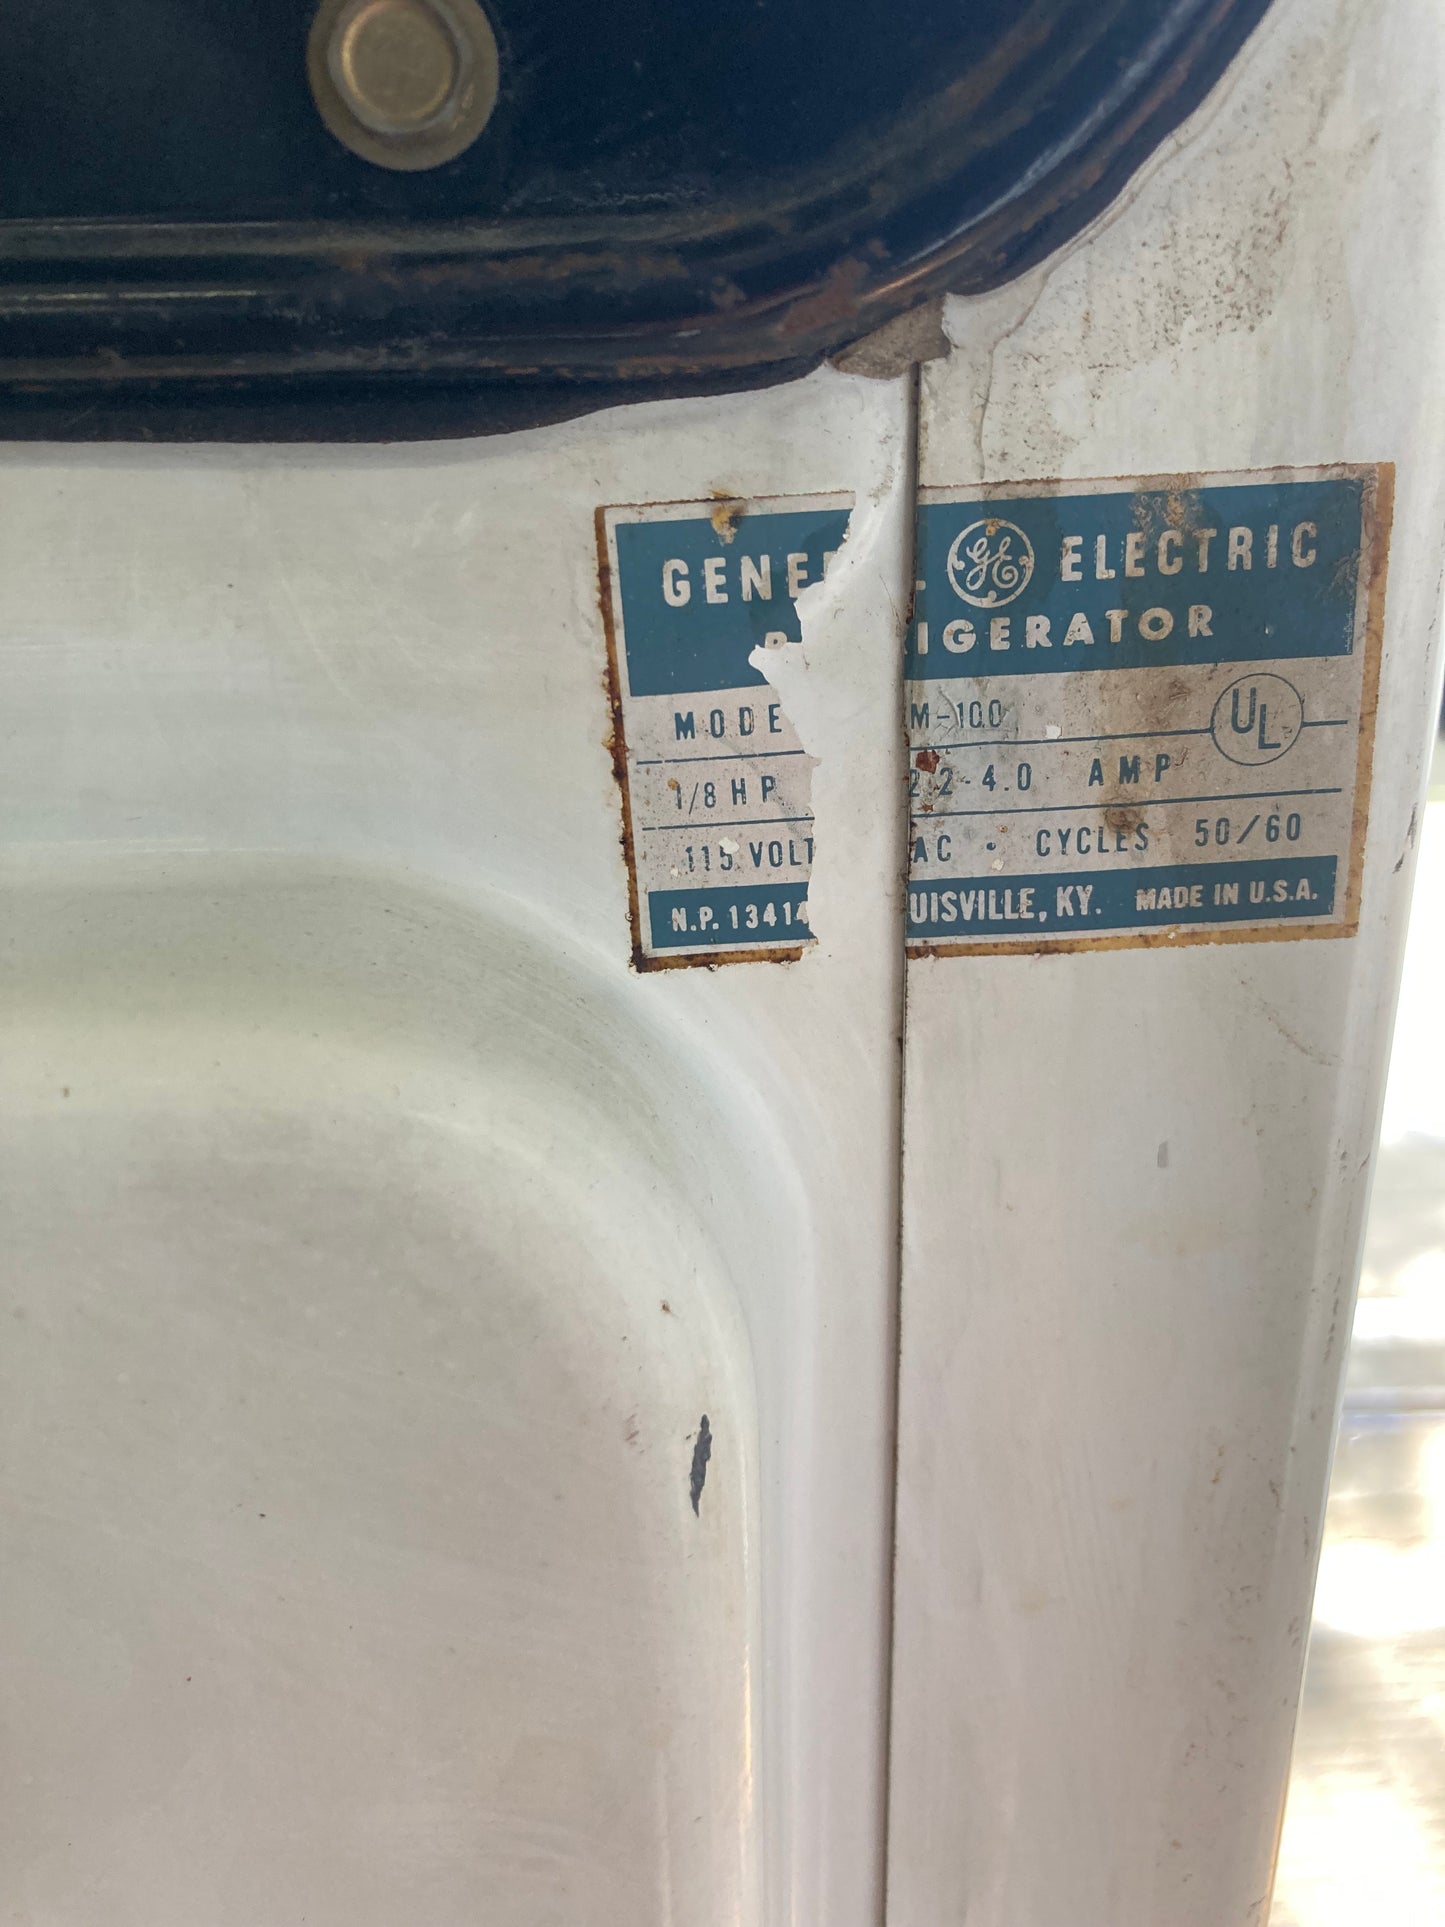 GE Refrigerator Vintage Antique Very Rare Top Freezer in White 888680